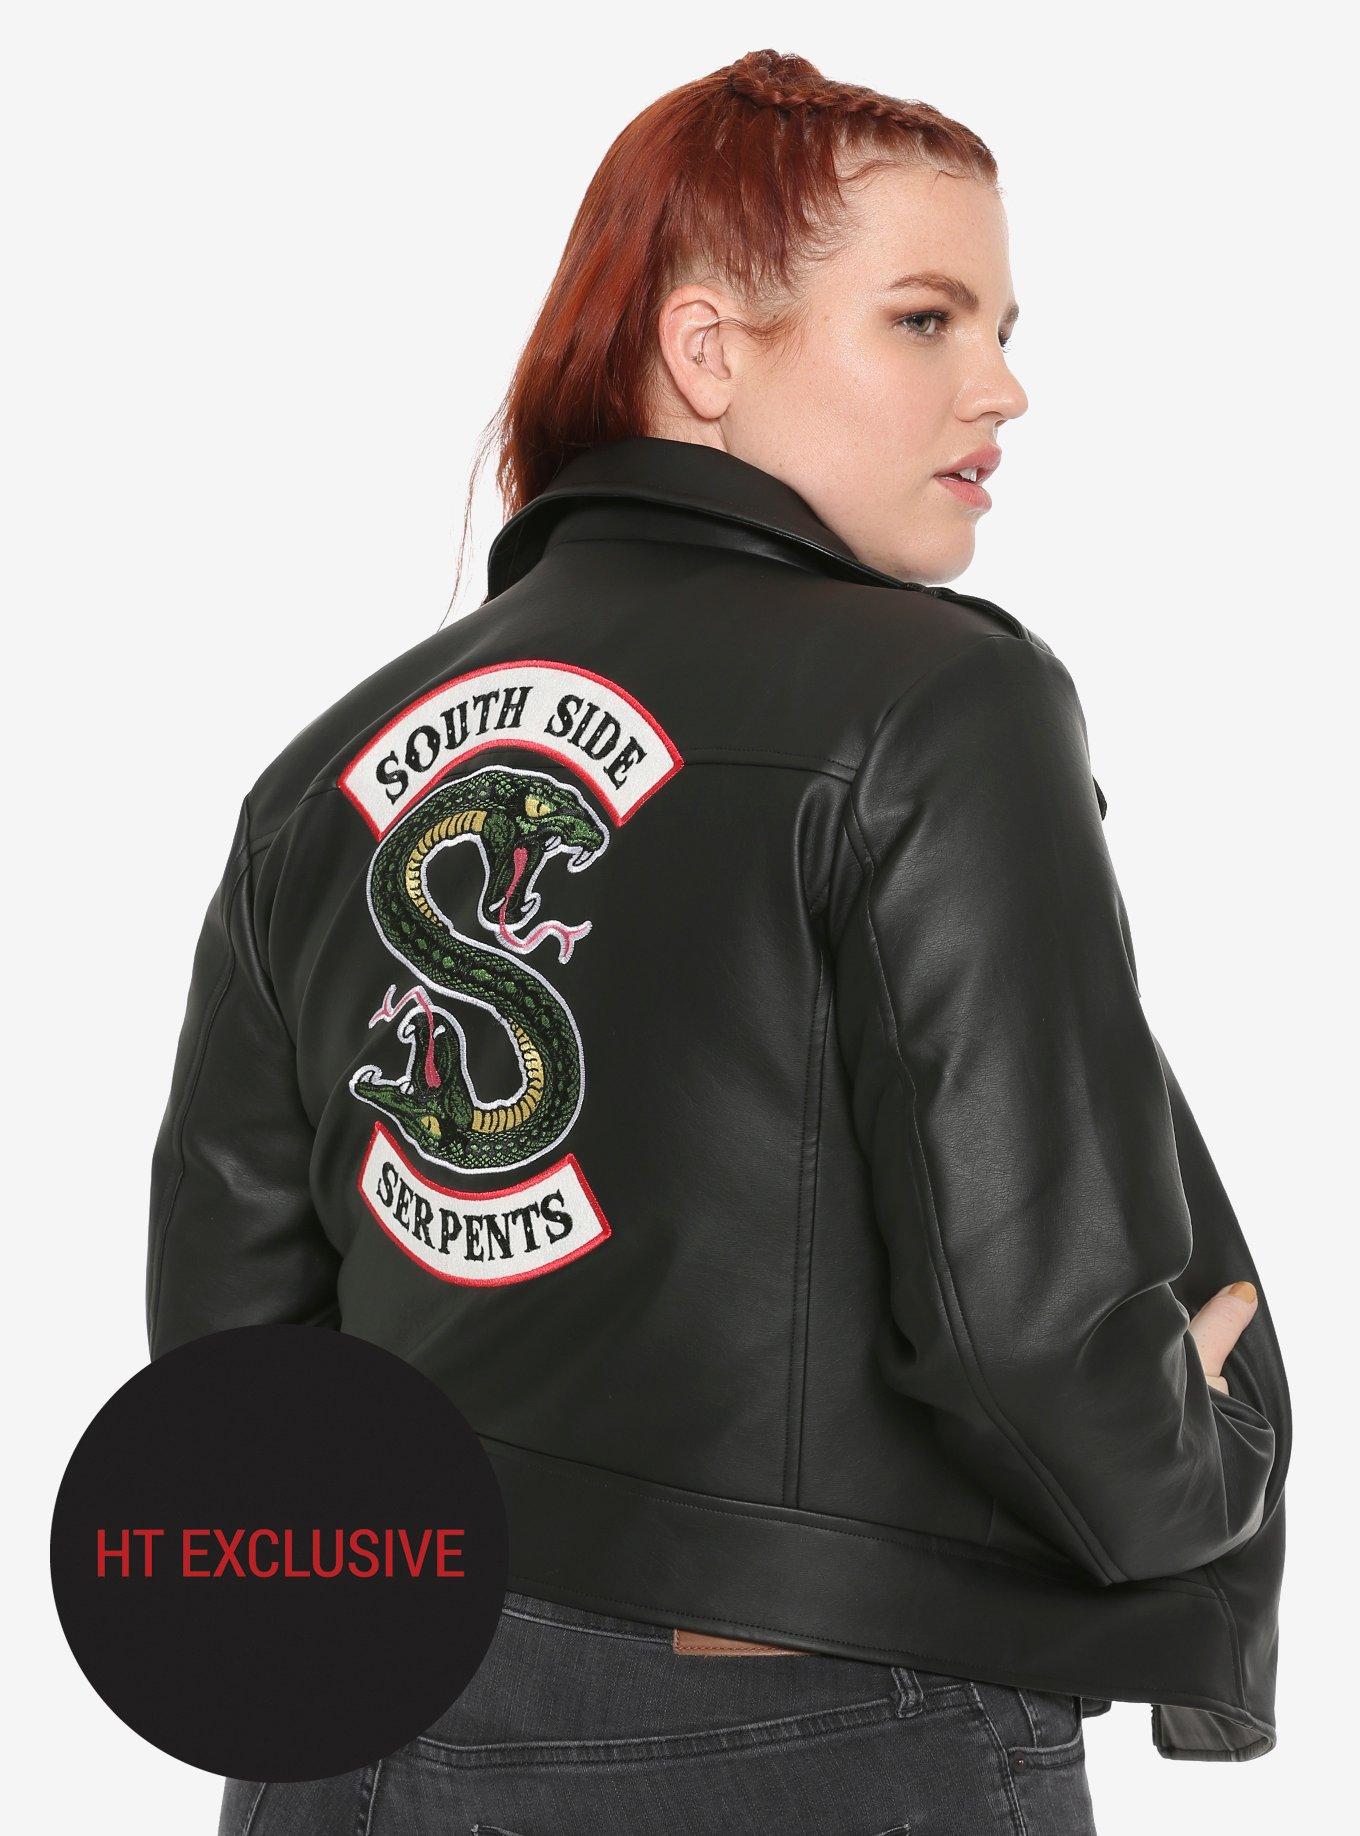 Riverdale Southside Serpents Faux Leather Girls Jacket Plus Size Hot Topic Exclusive, BLACK, hi-res